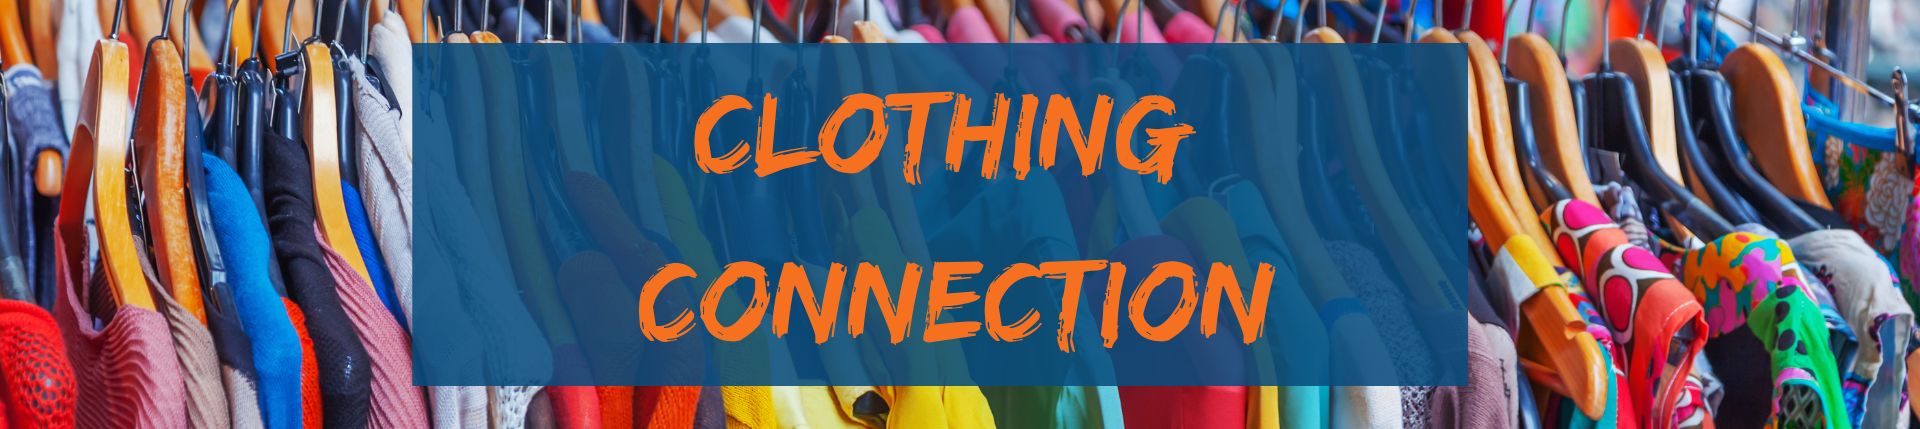 Clothing Connection: A Social Enterprise